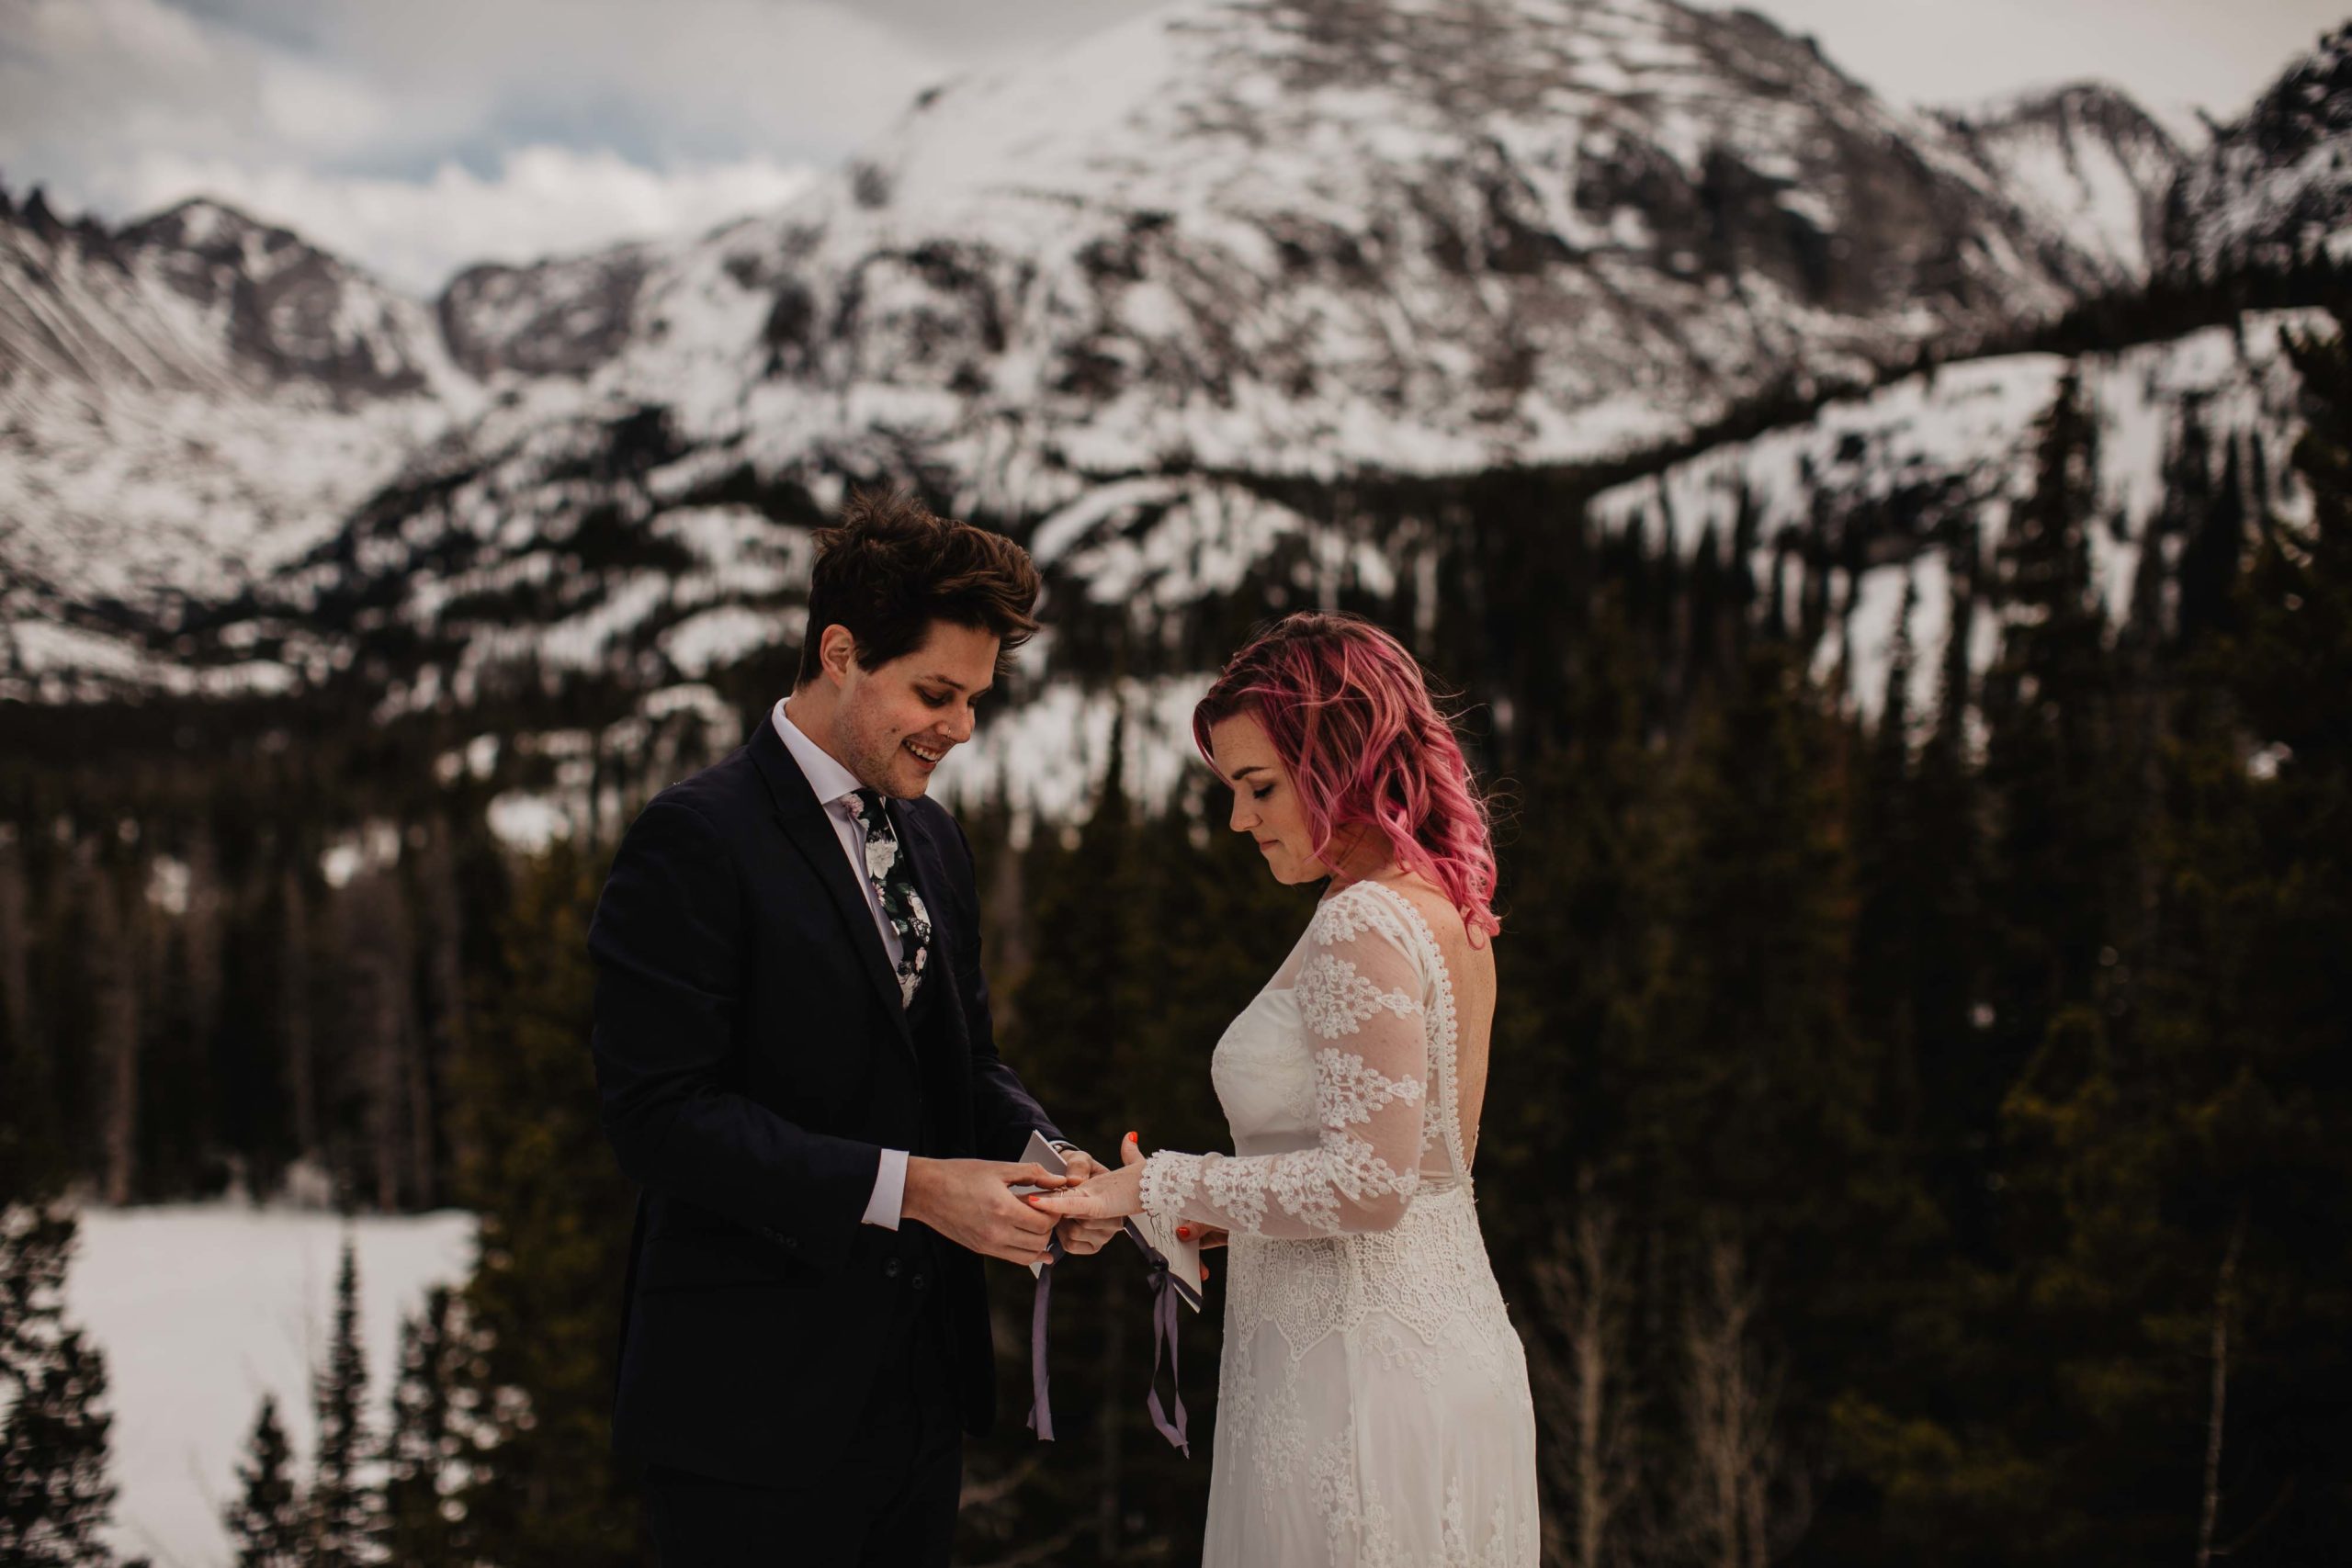 Rocky Mountain National Park wedding captured by adventure elopement photographer, Magnolia + Ember.